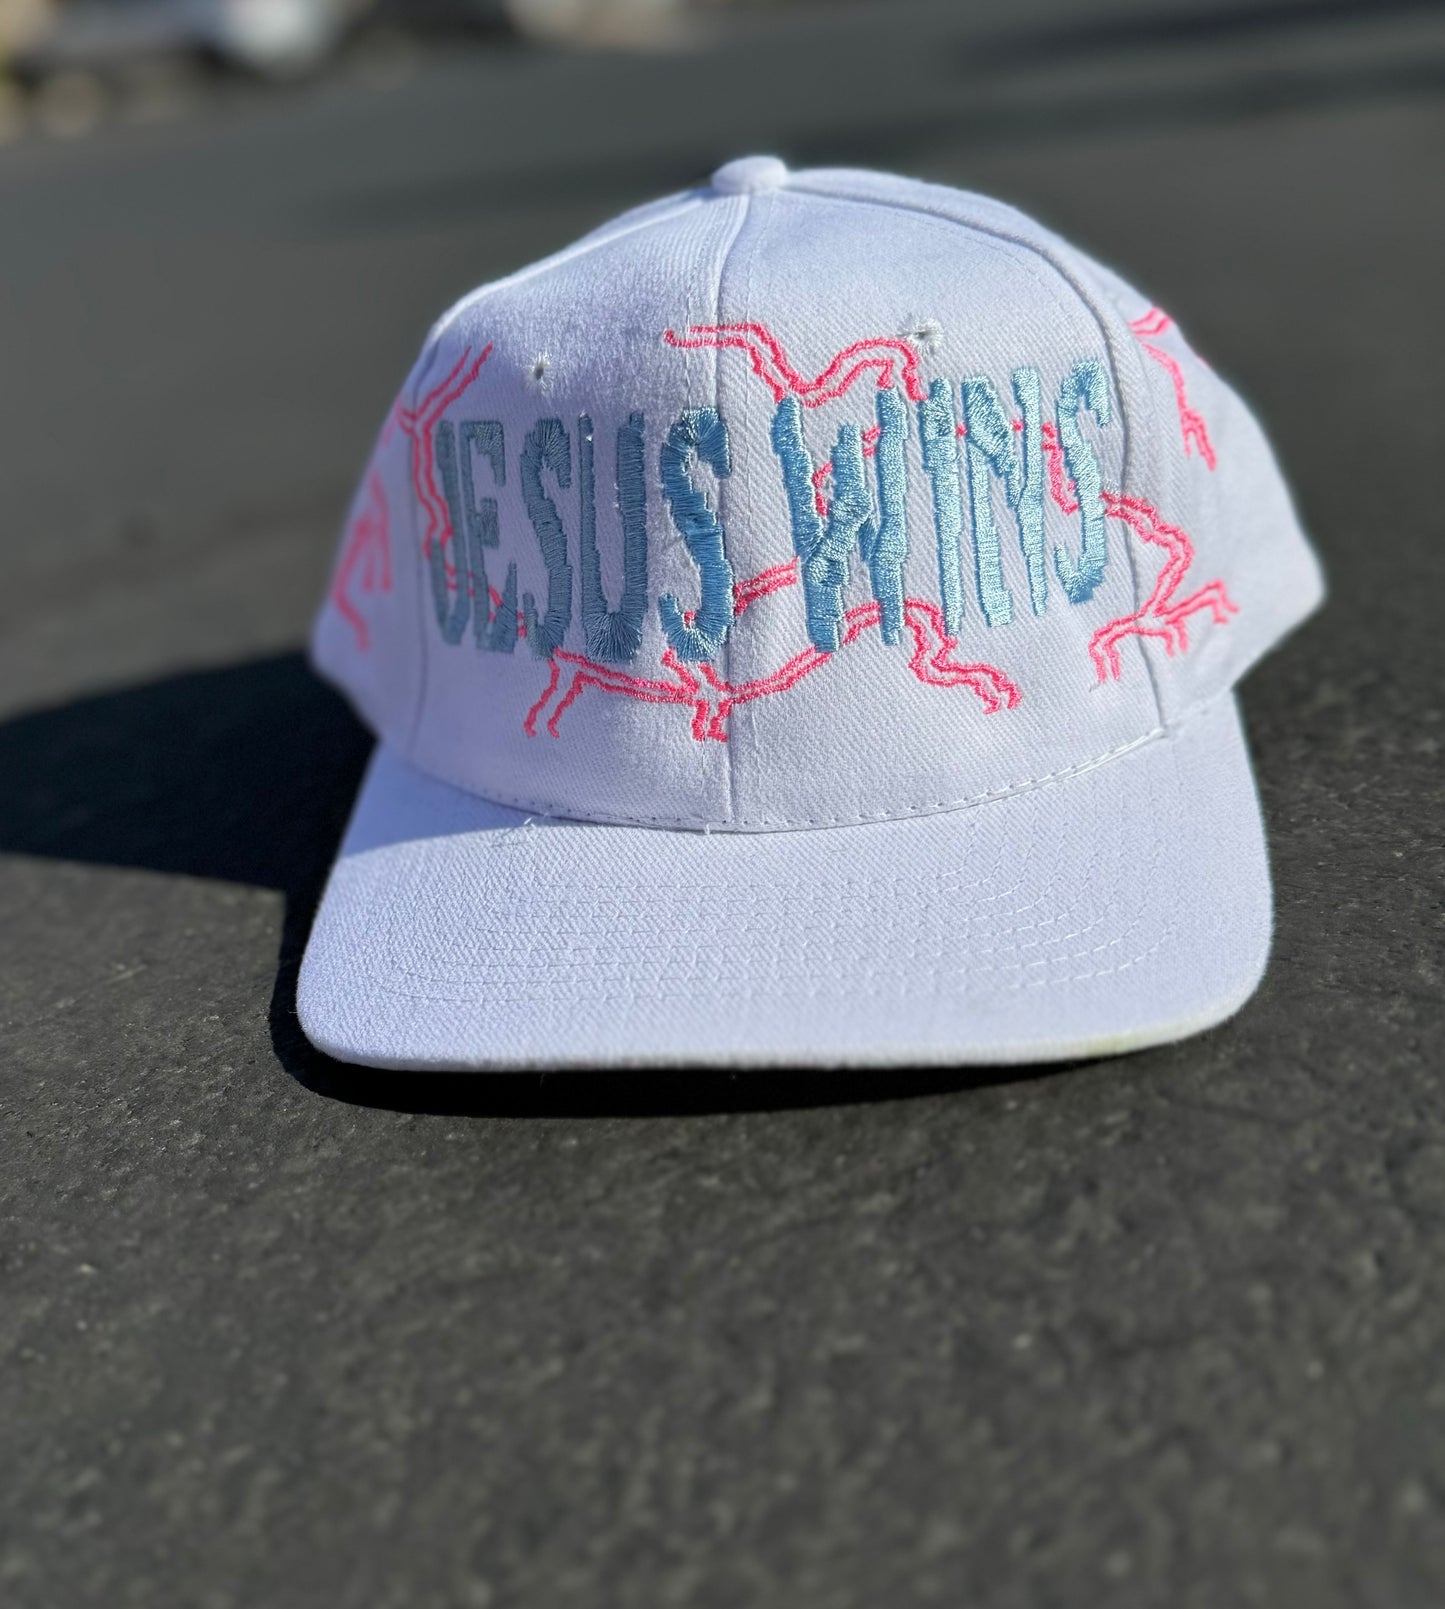 Jesus Wins Pink Lighting hat